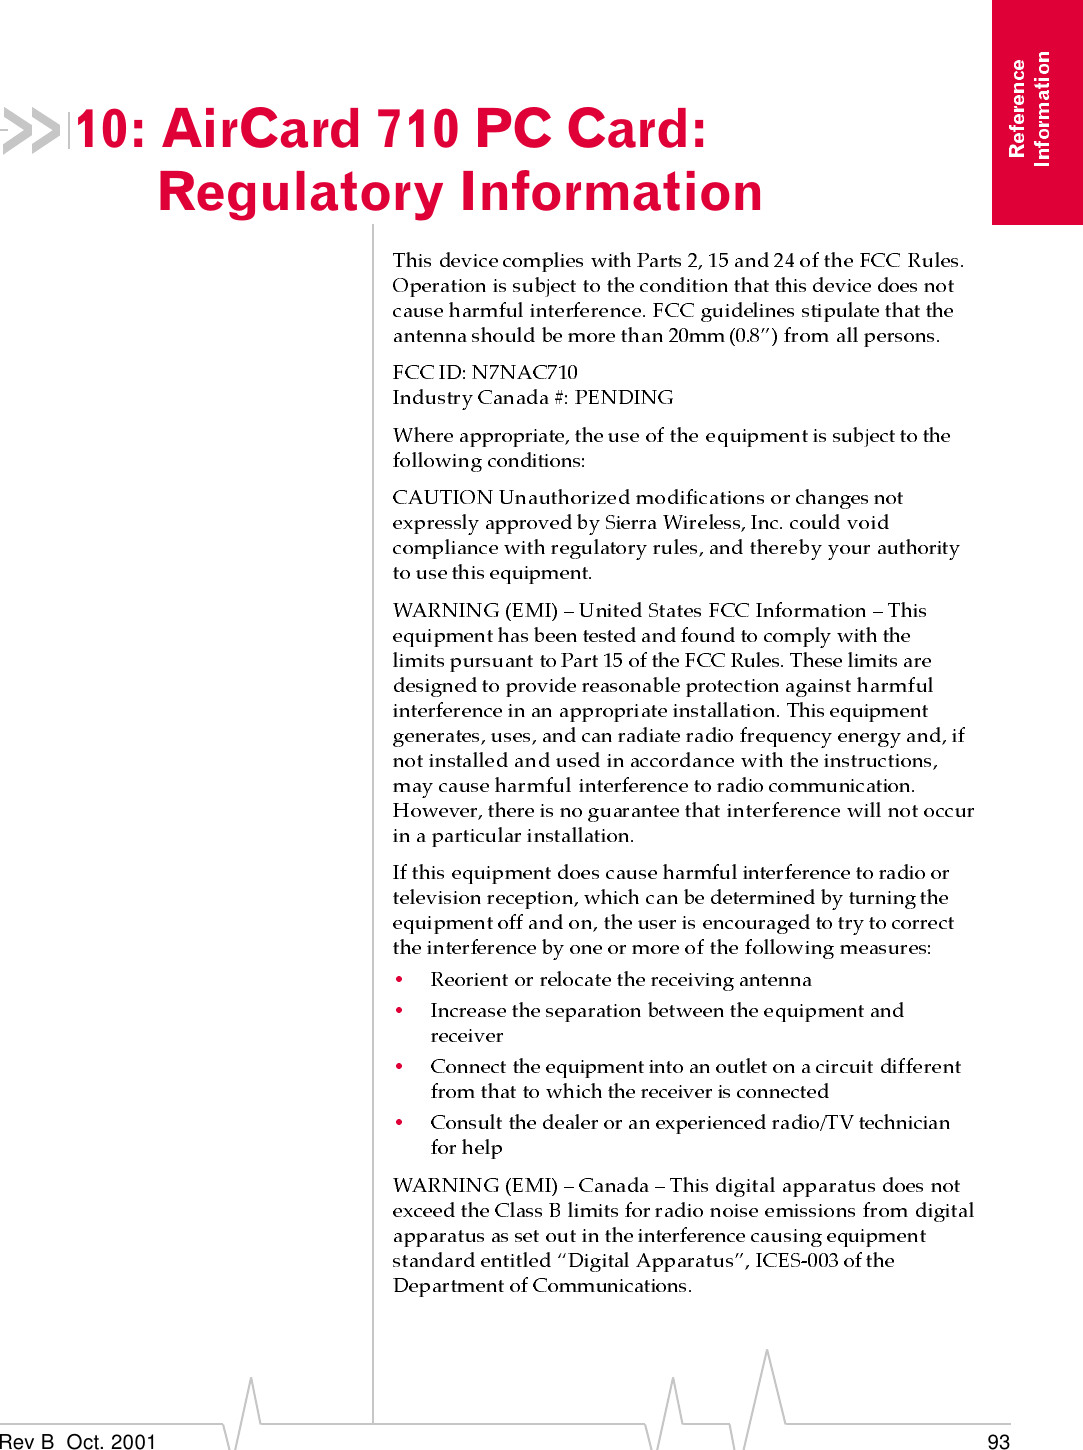 Rev B  Oct. 2001 9310: AirCard 710 PC Card:Regulatory Information